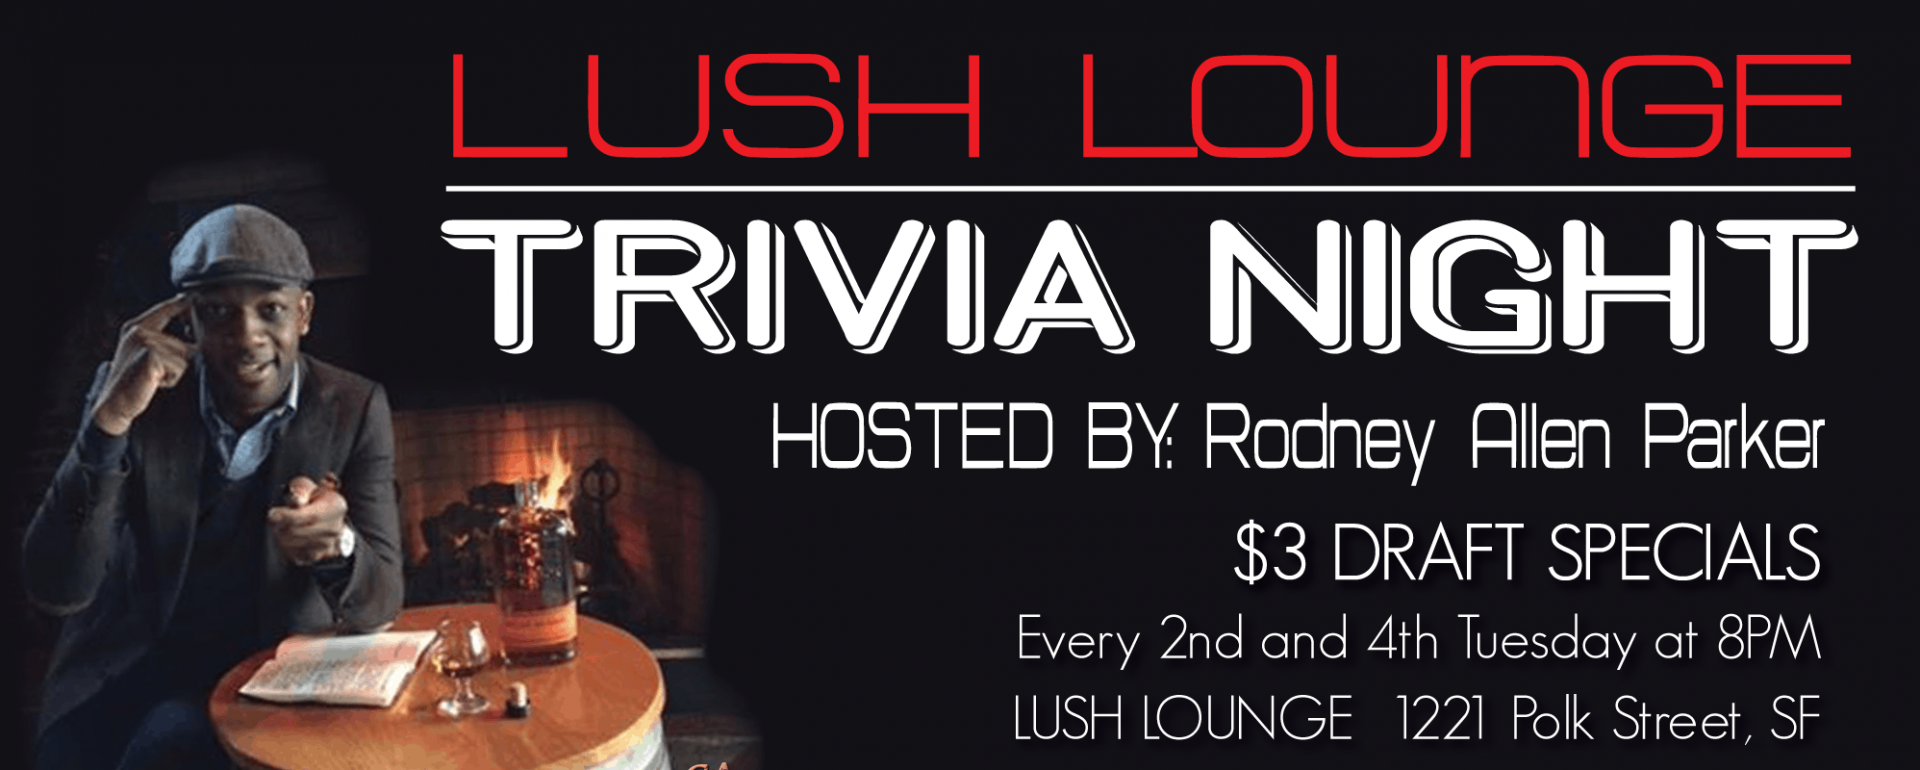 Lush Lounge Trivia Night